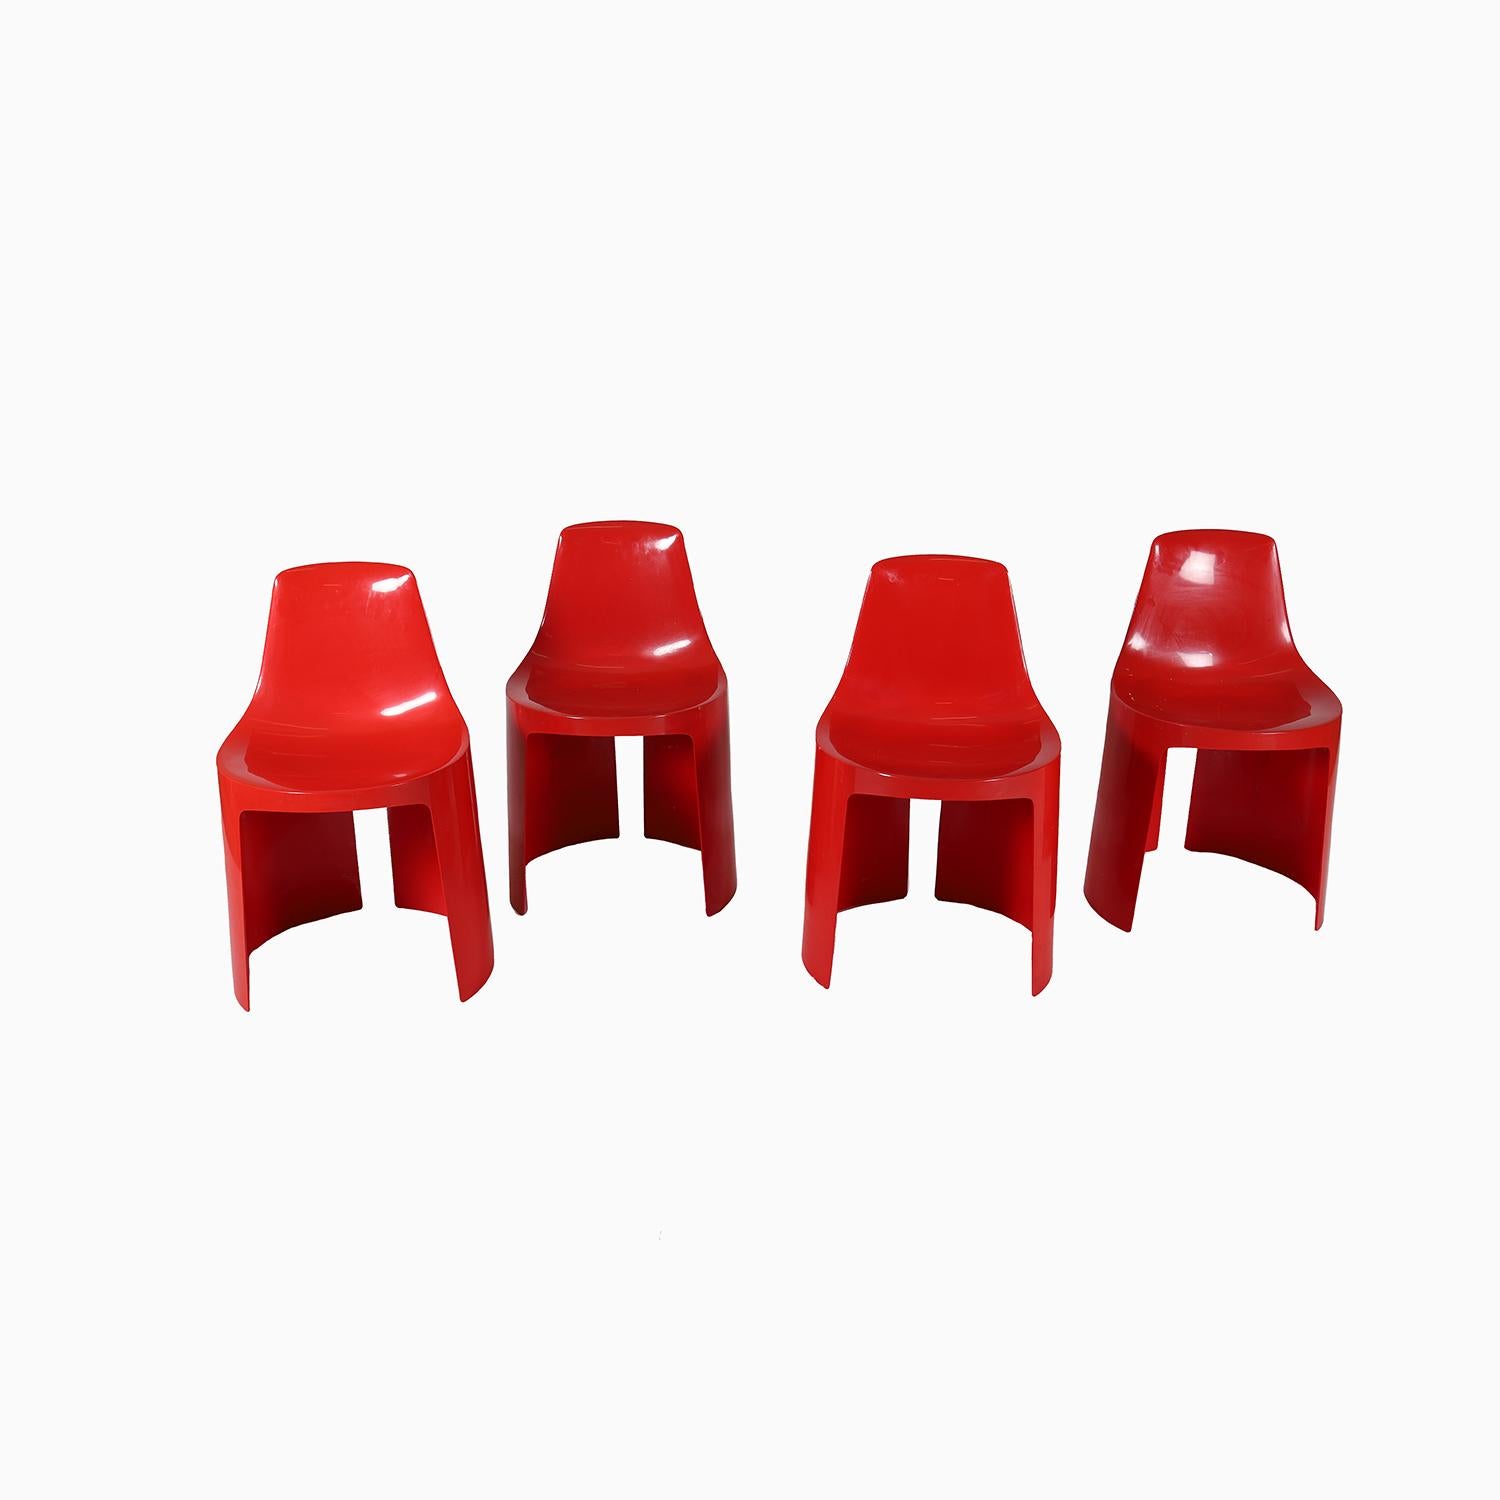  Roter geformter Kunststoff-Stapelstuhl „Umbo“ von Kay LeRoy Ruggles (amerikanisch) im Angebot